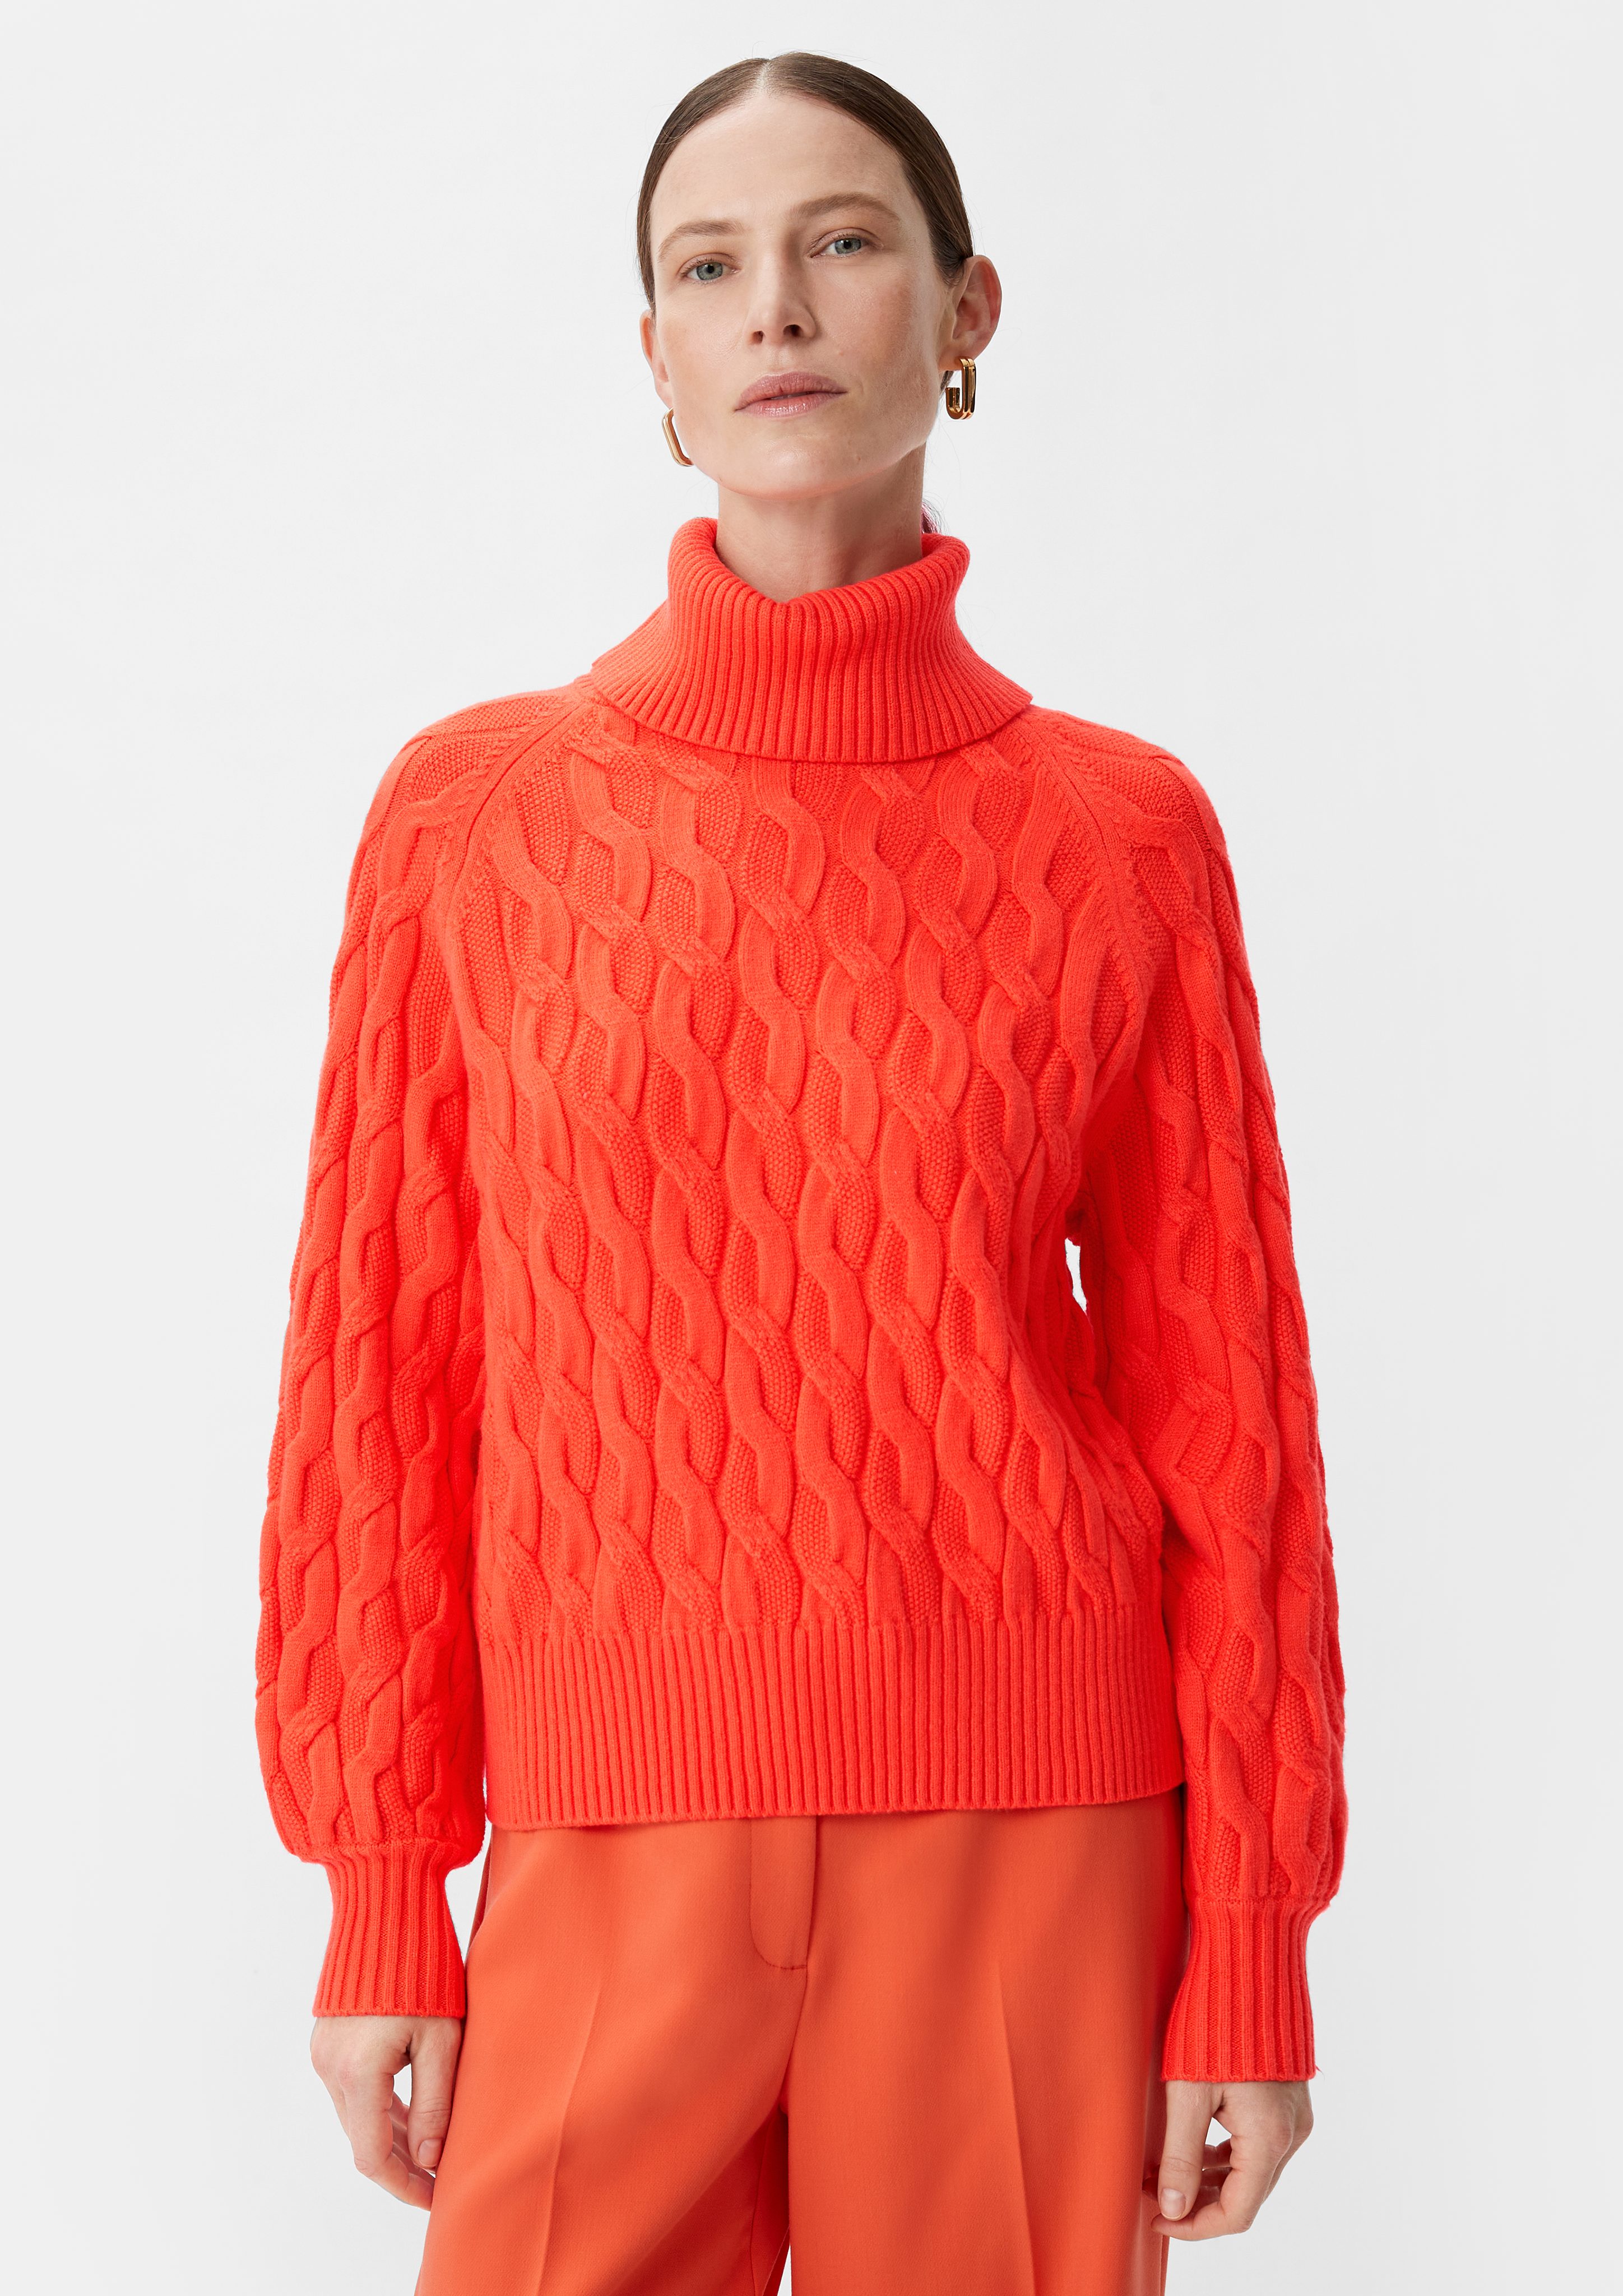 Comma Langarmshirt Pullover orange mit Strickmuster